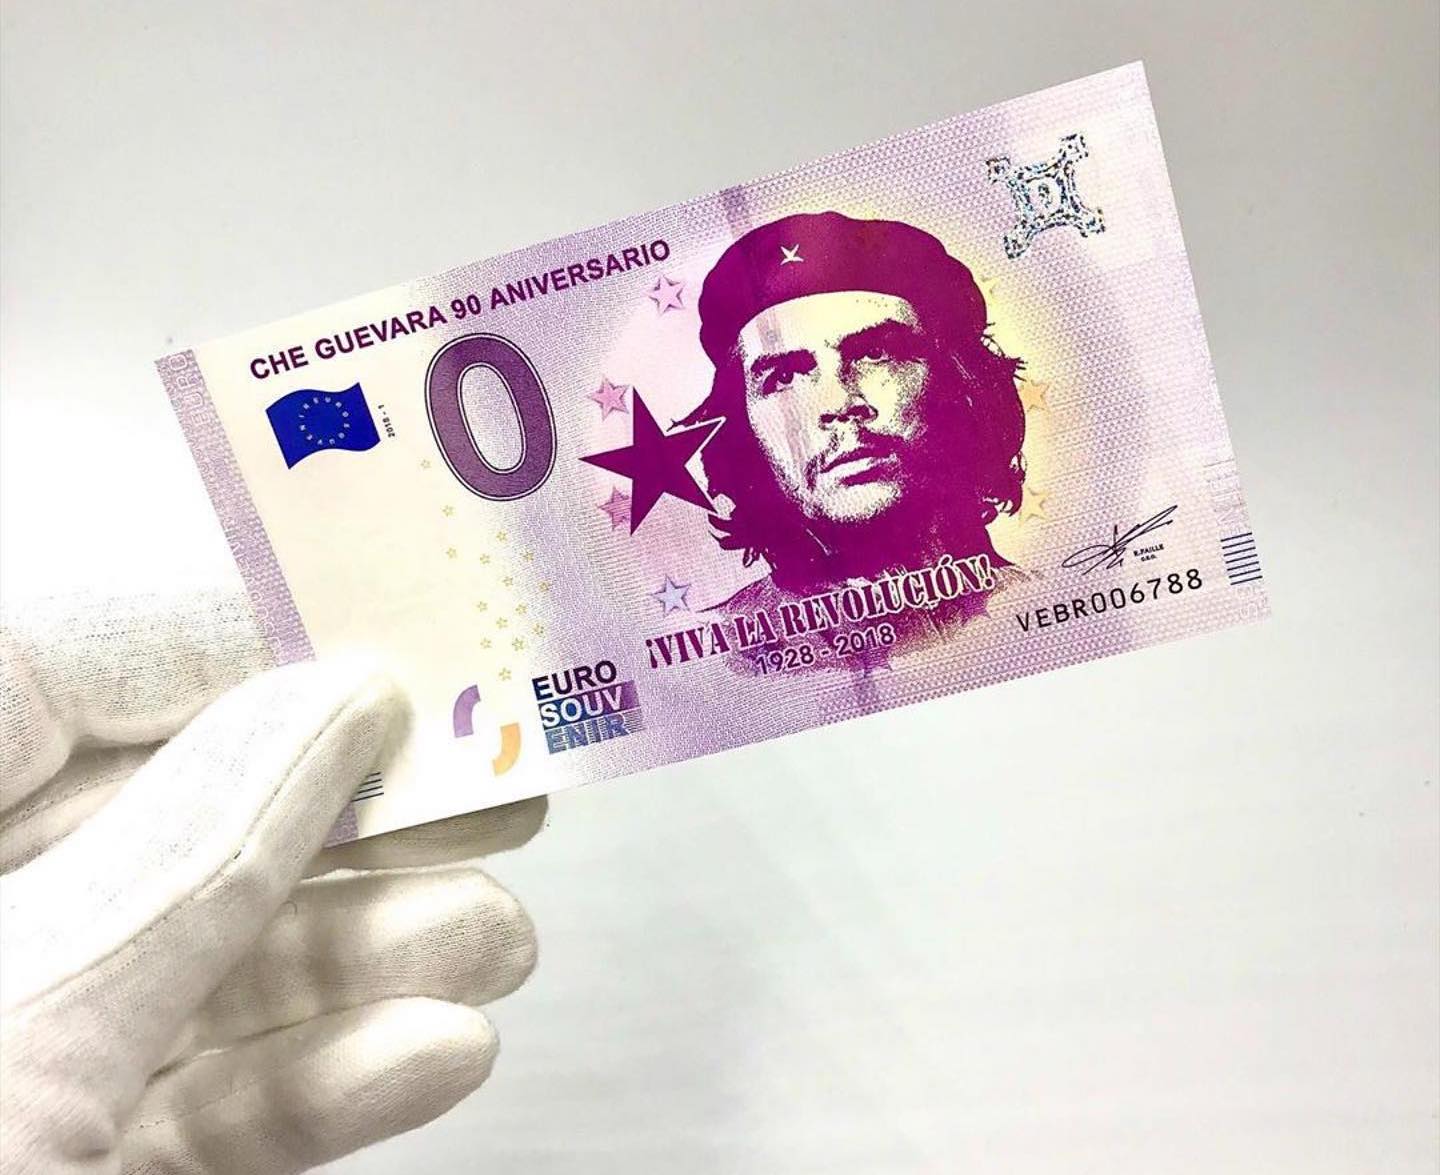 Eurosouvenir Che Guevara Ticket 90º Aniversário